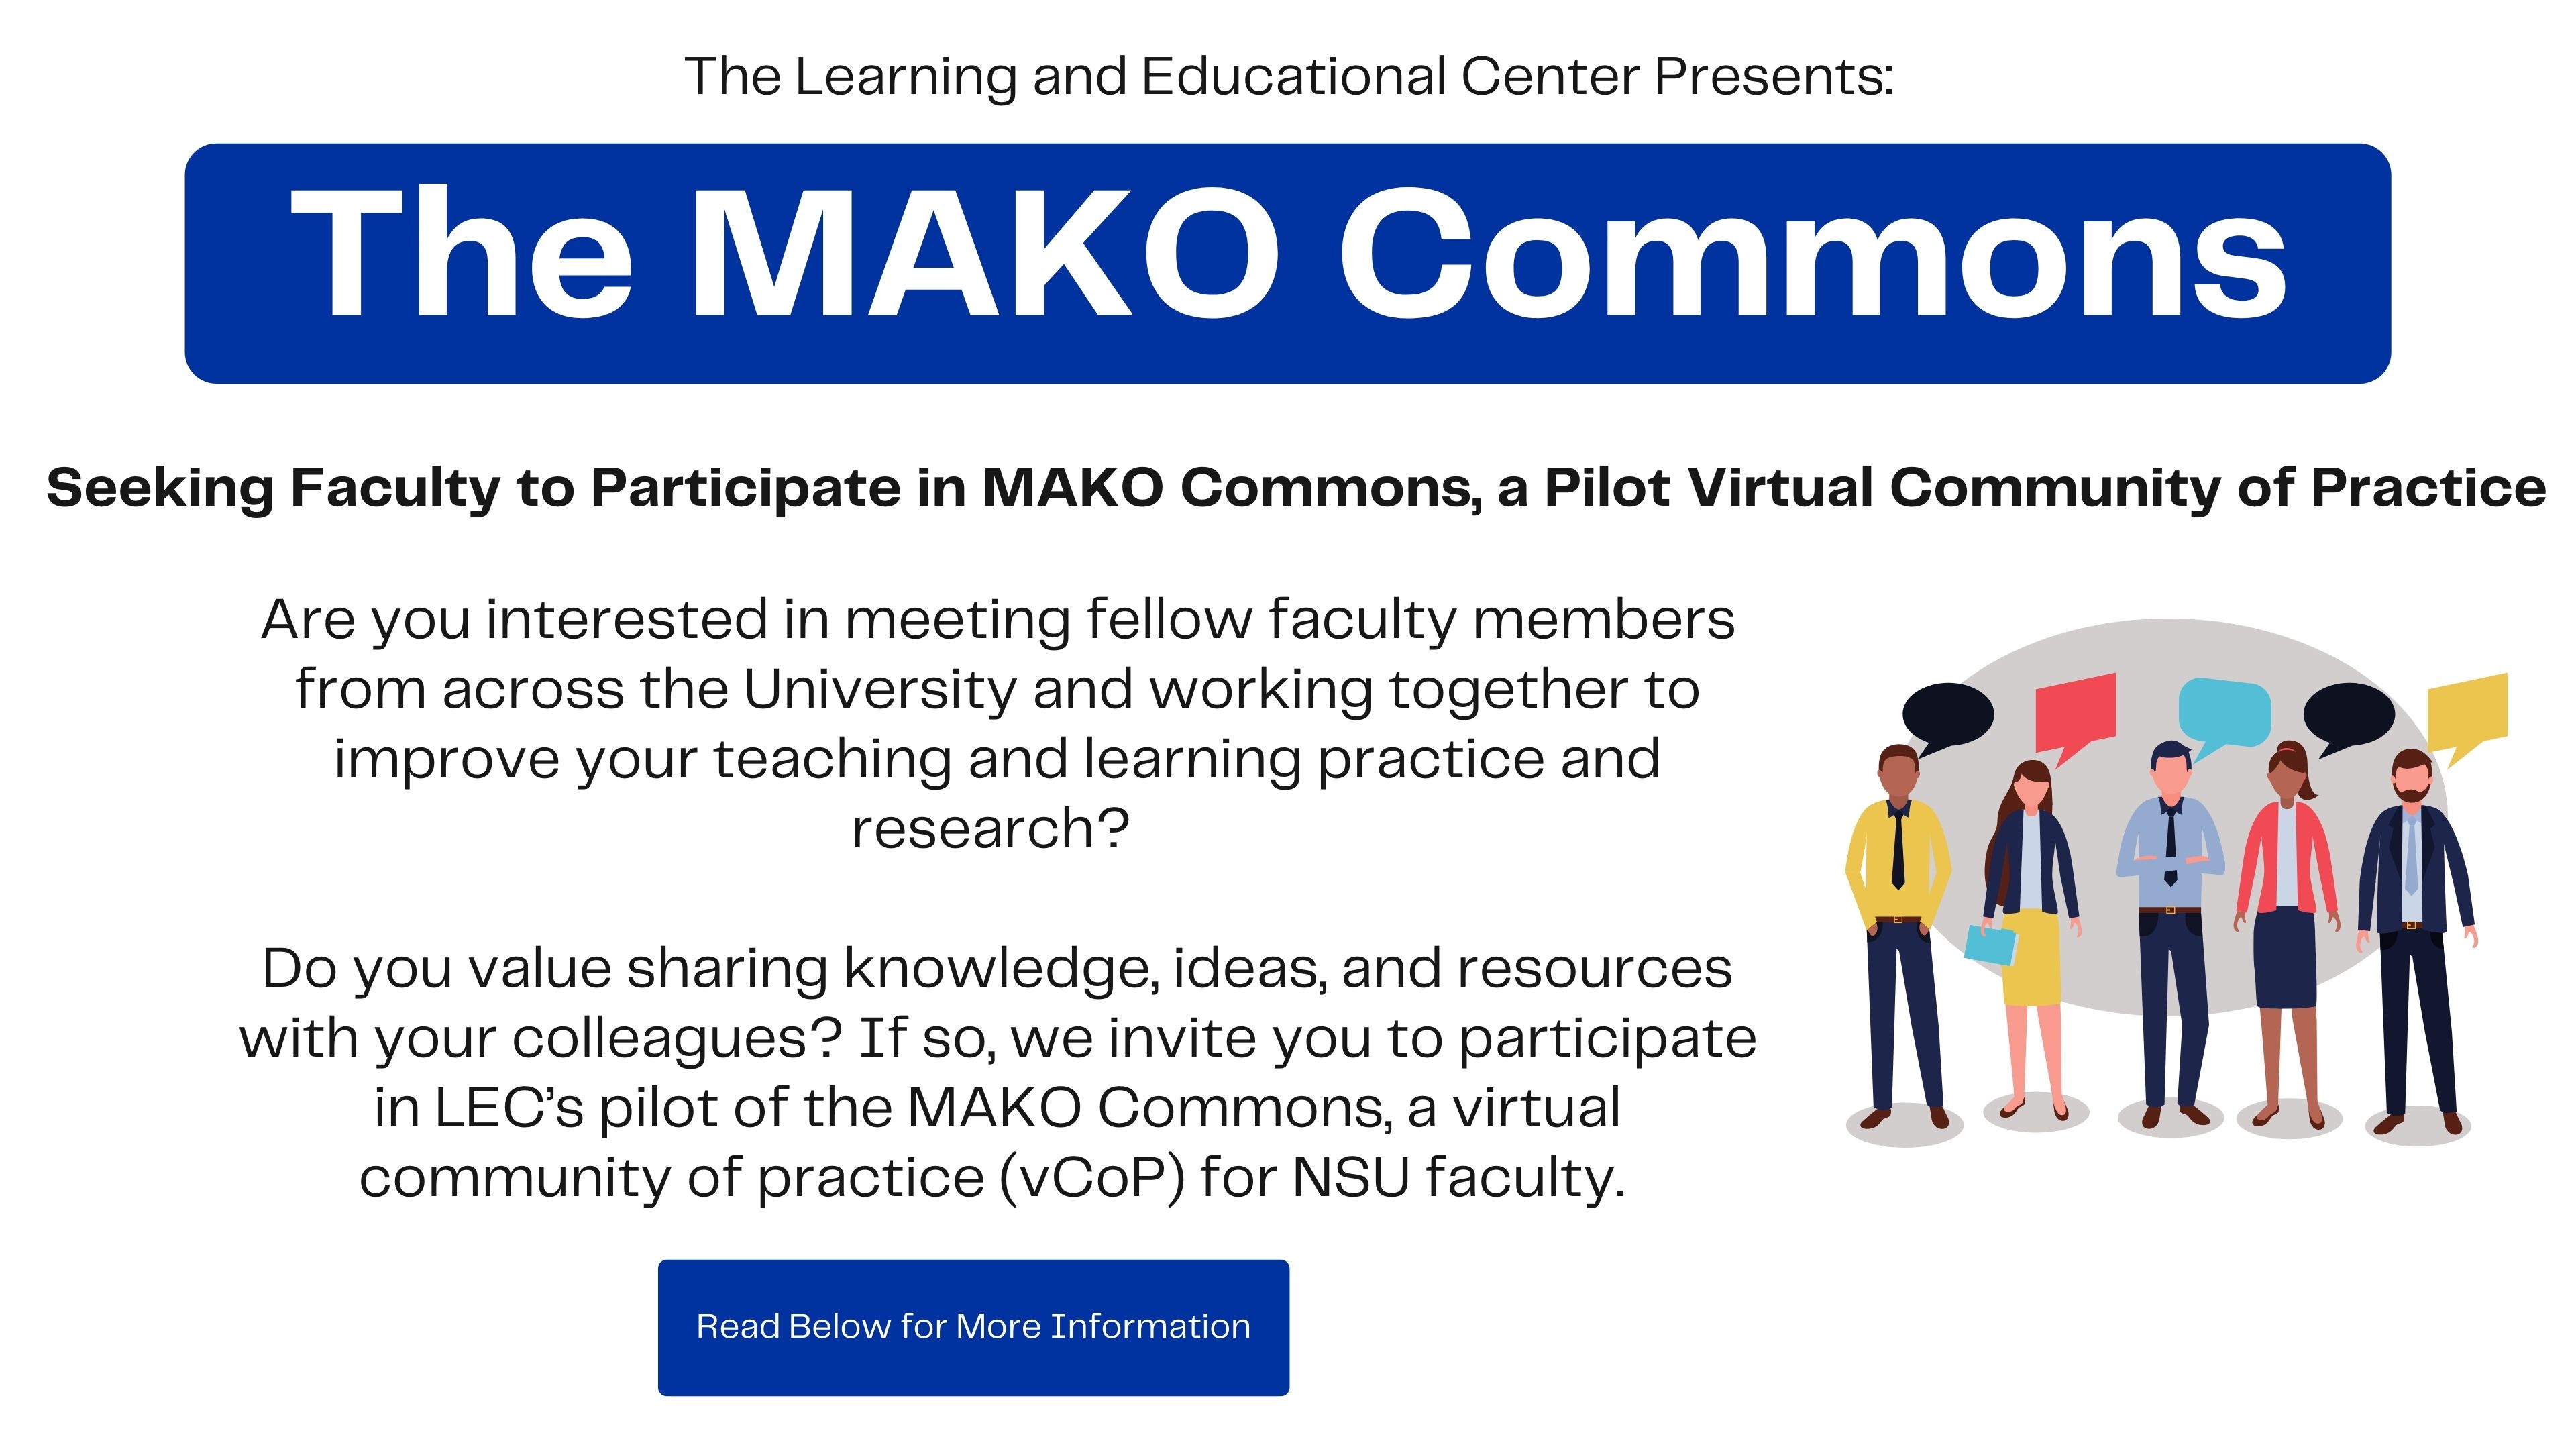 The Mako Commons